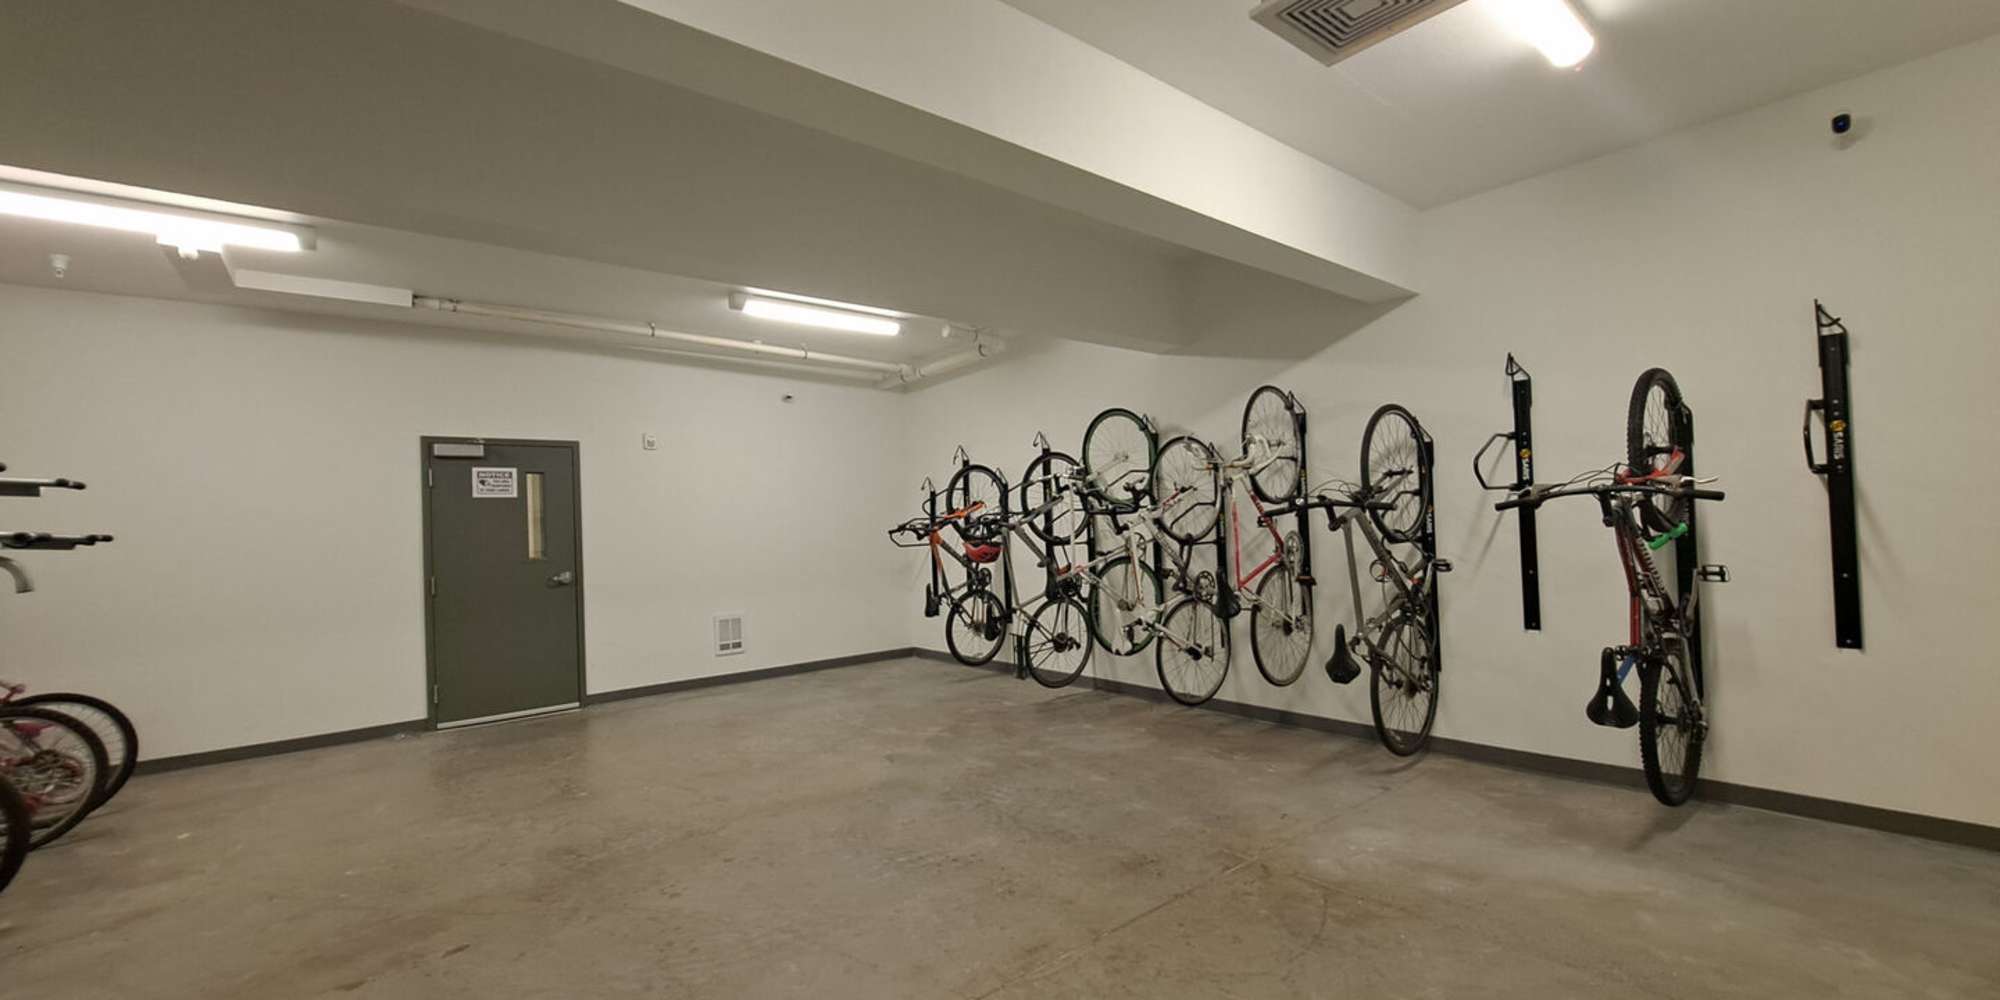 Bike storage room at Koz on 13th in Portland, Oregon